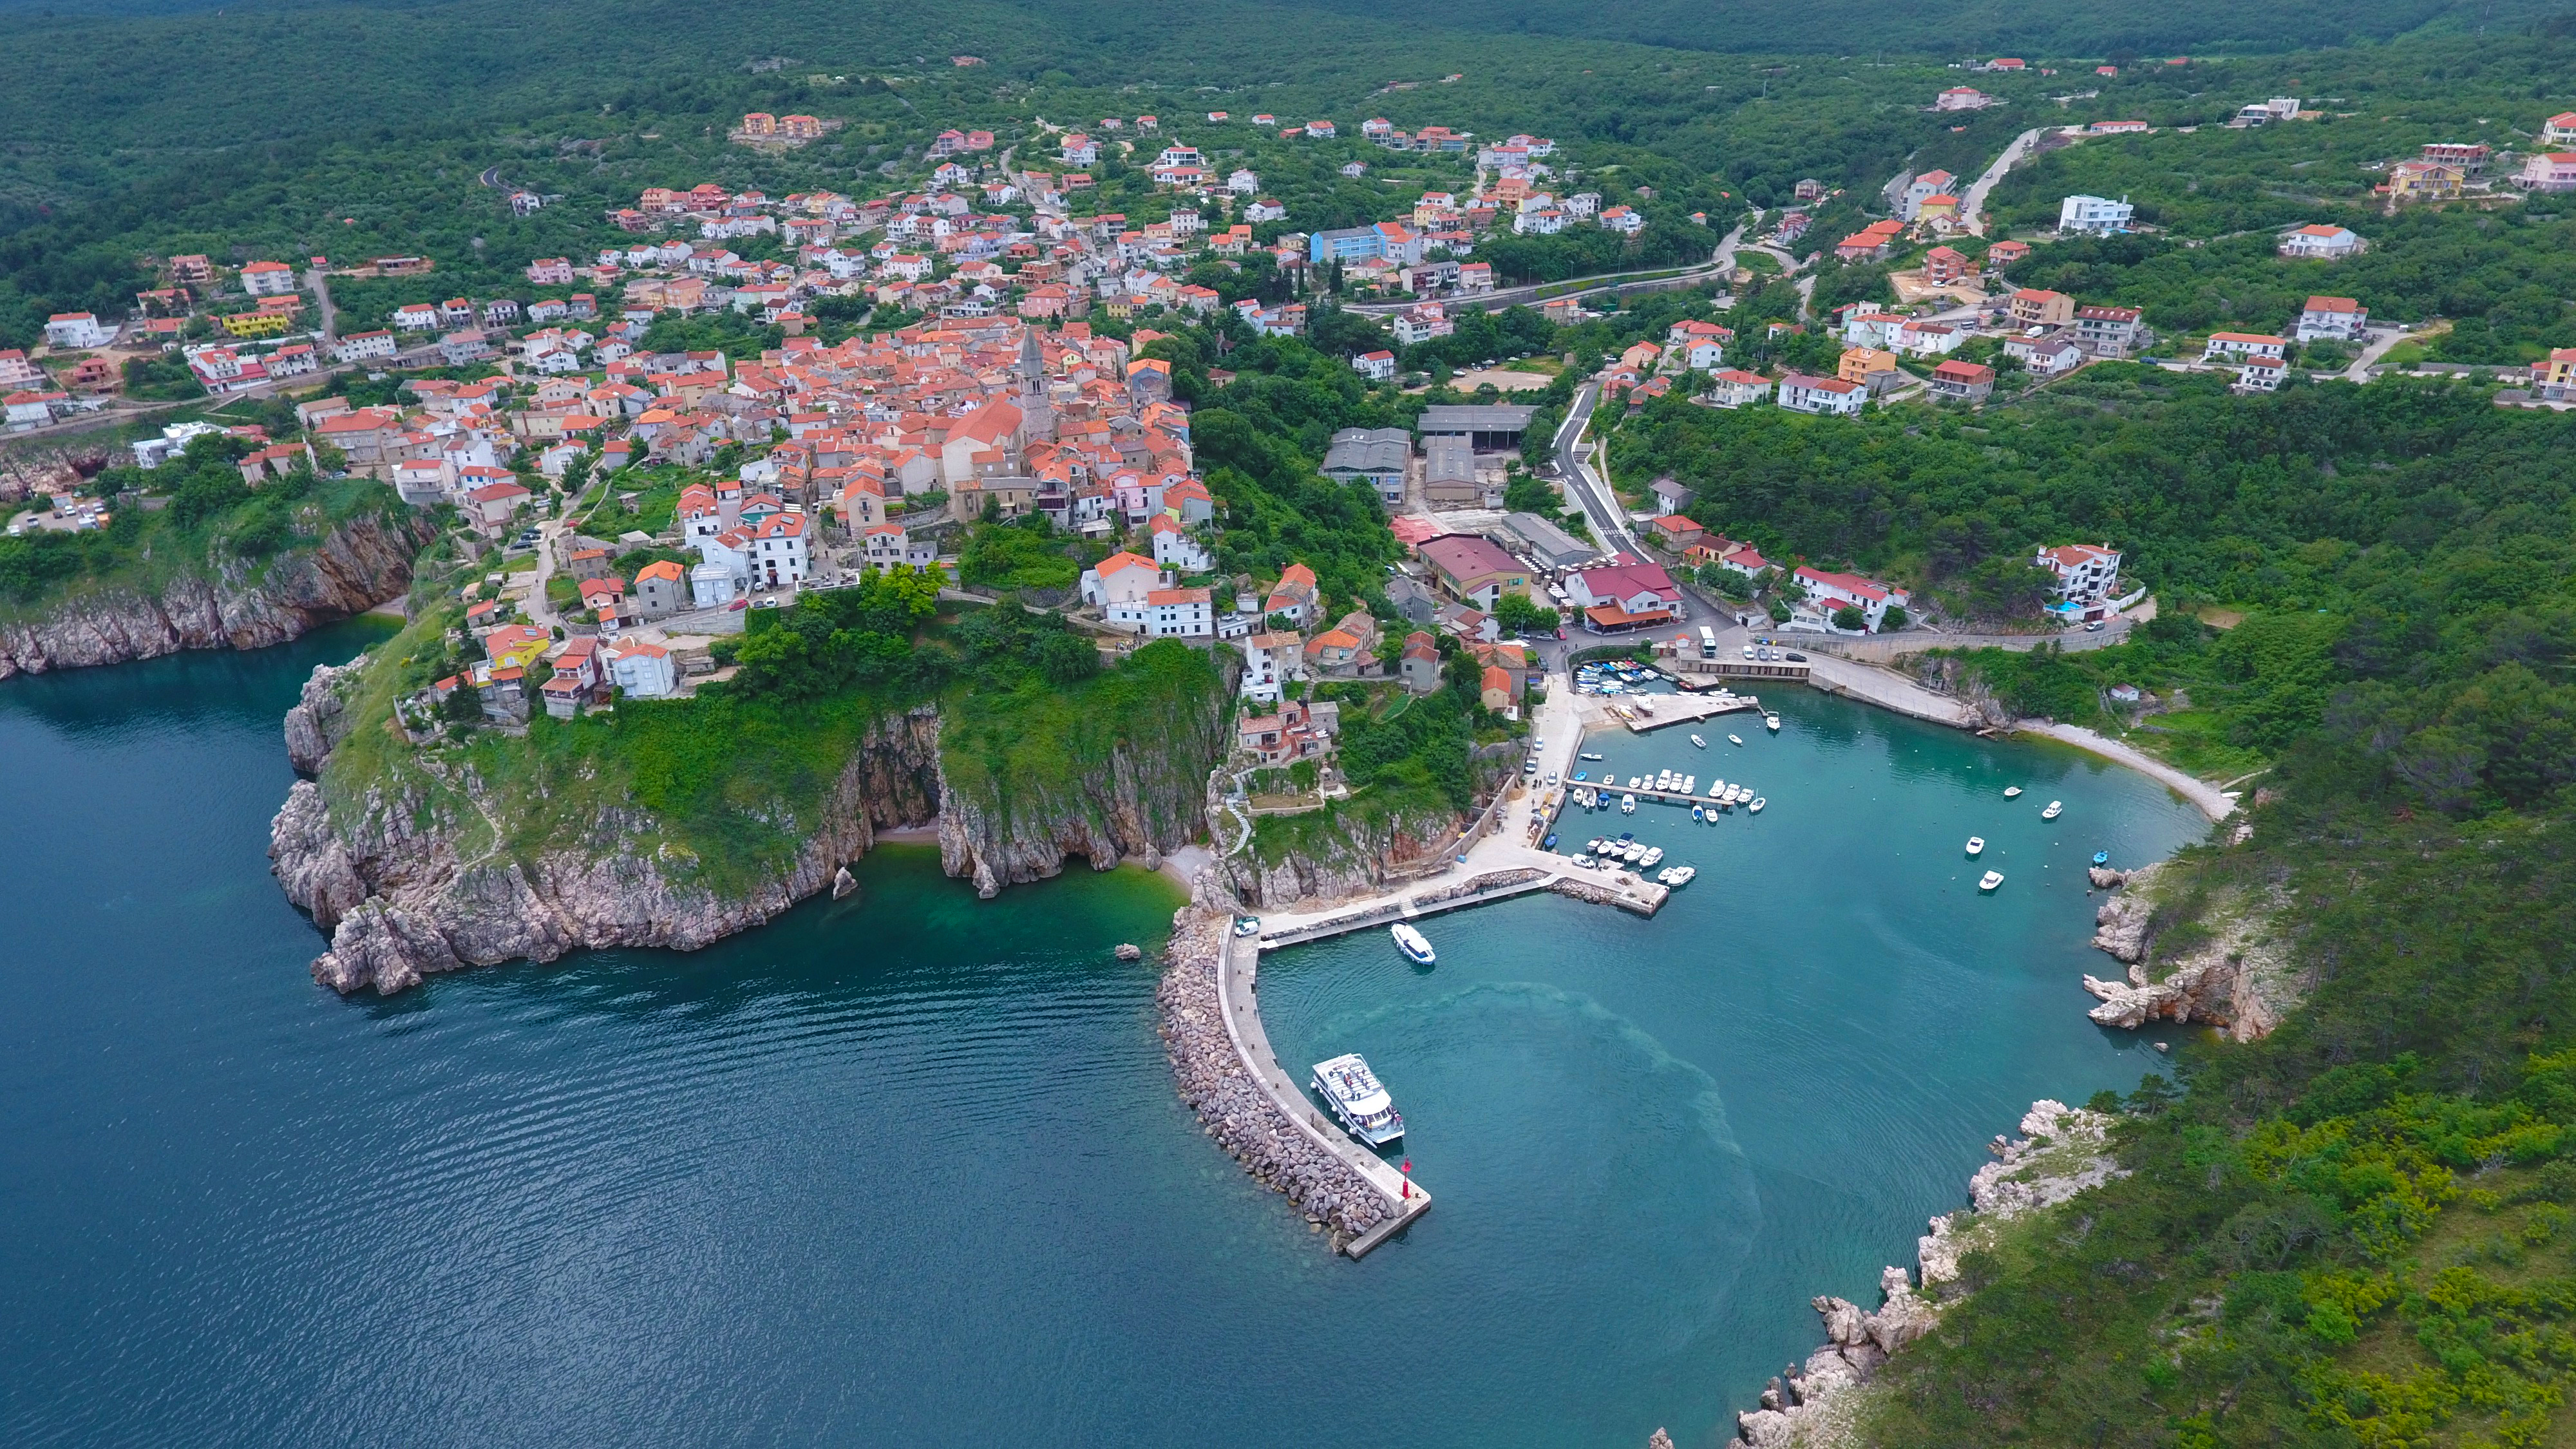 Luxury Holiday Villa Rental in Krk Island, Croatia